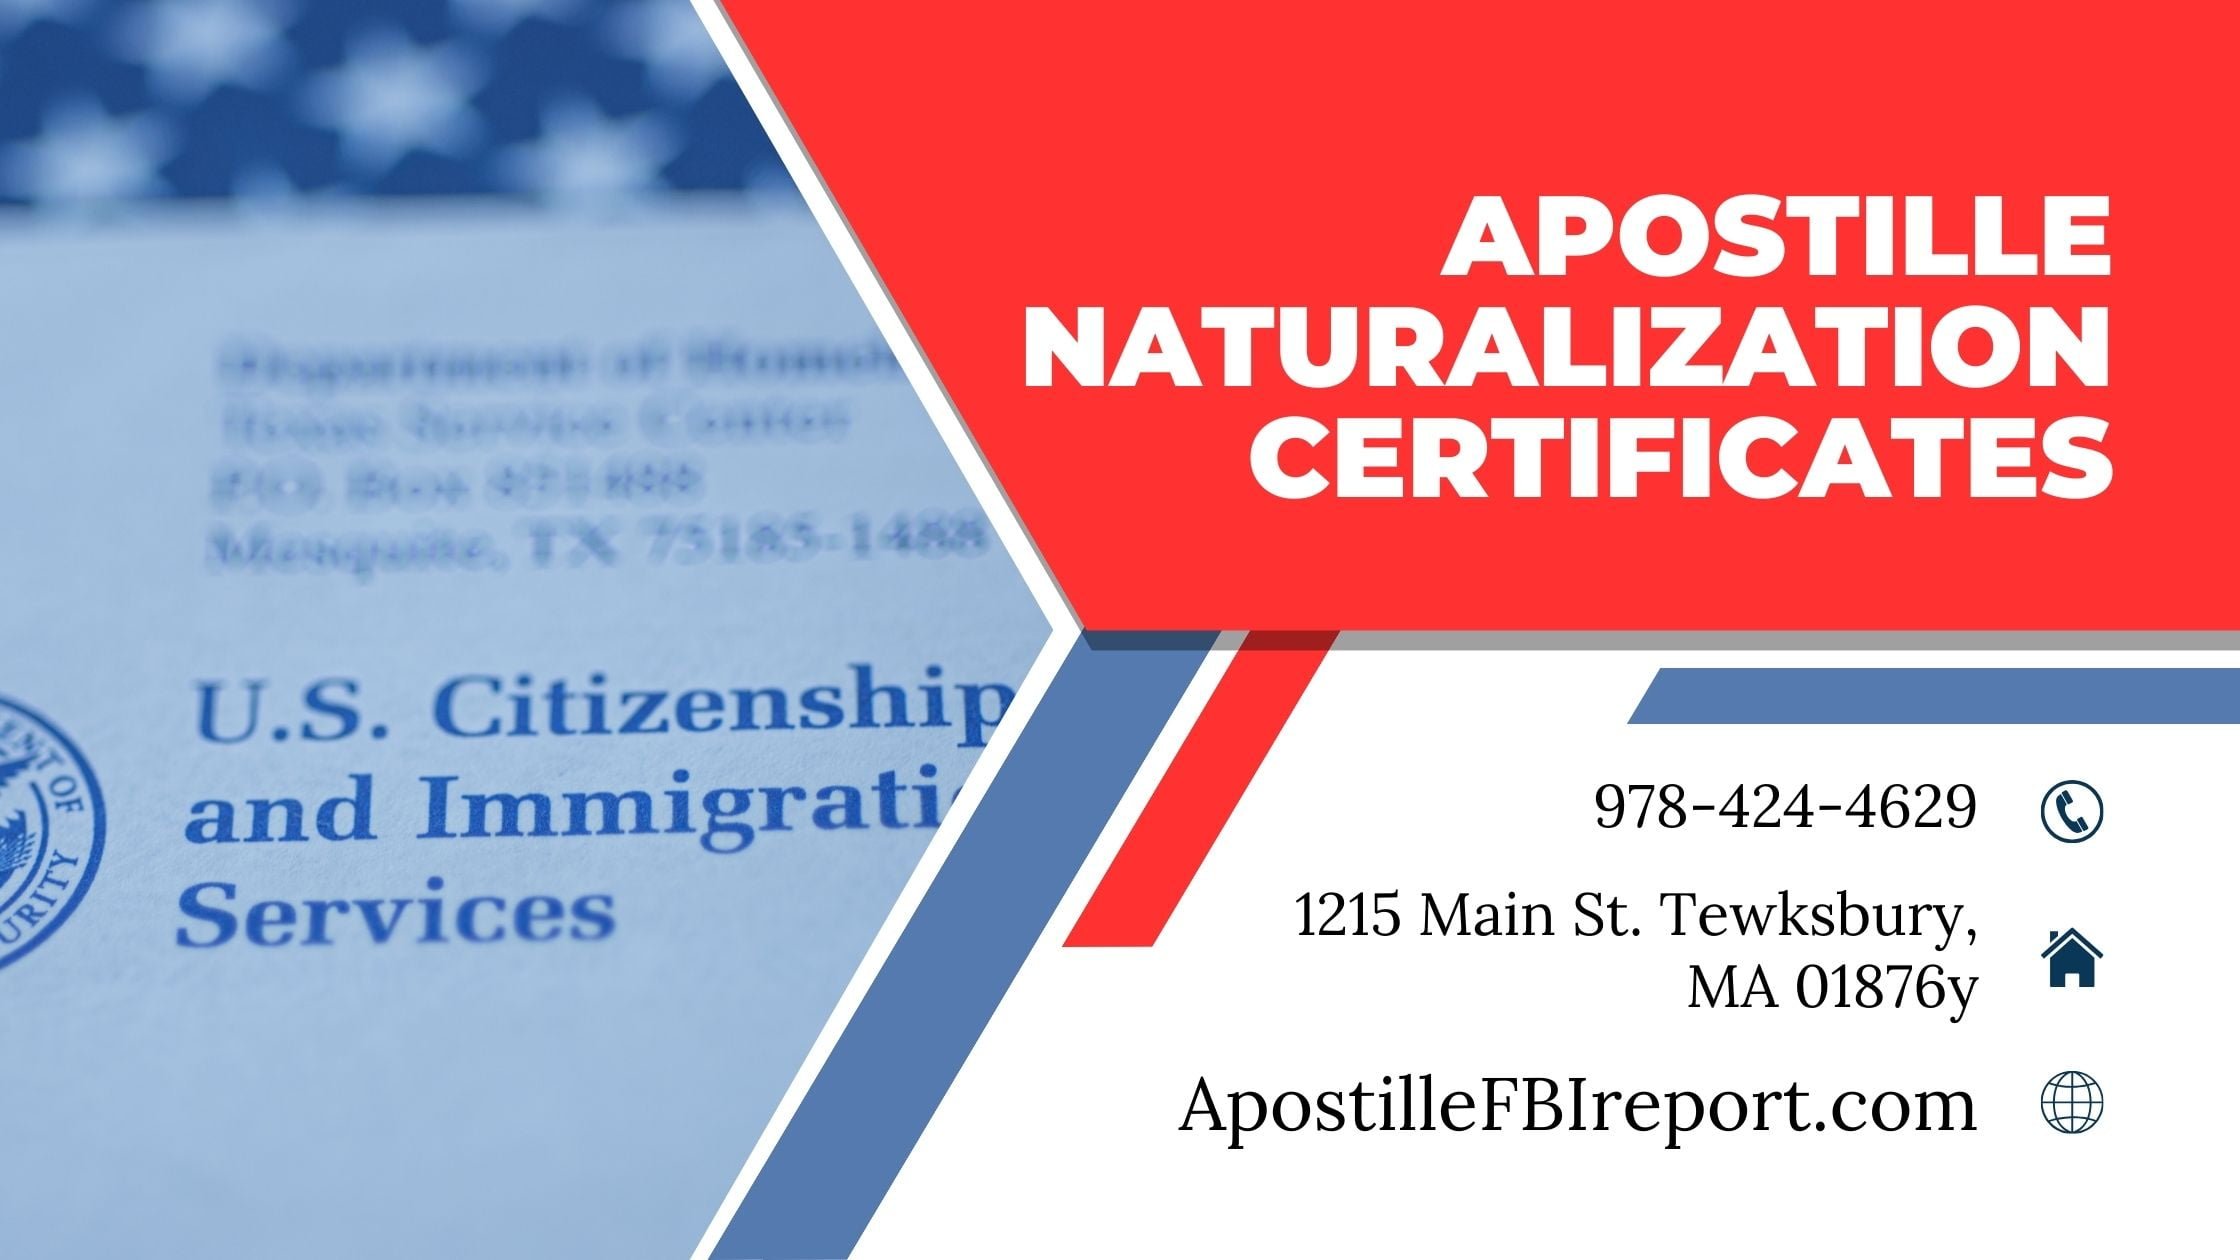 Apostille Your U.S. Naturalization Certificate Easily - Apostille FBI Report - Apostille FBI Report